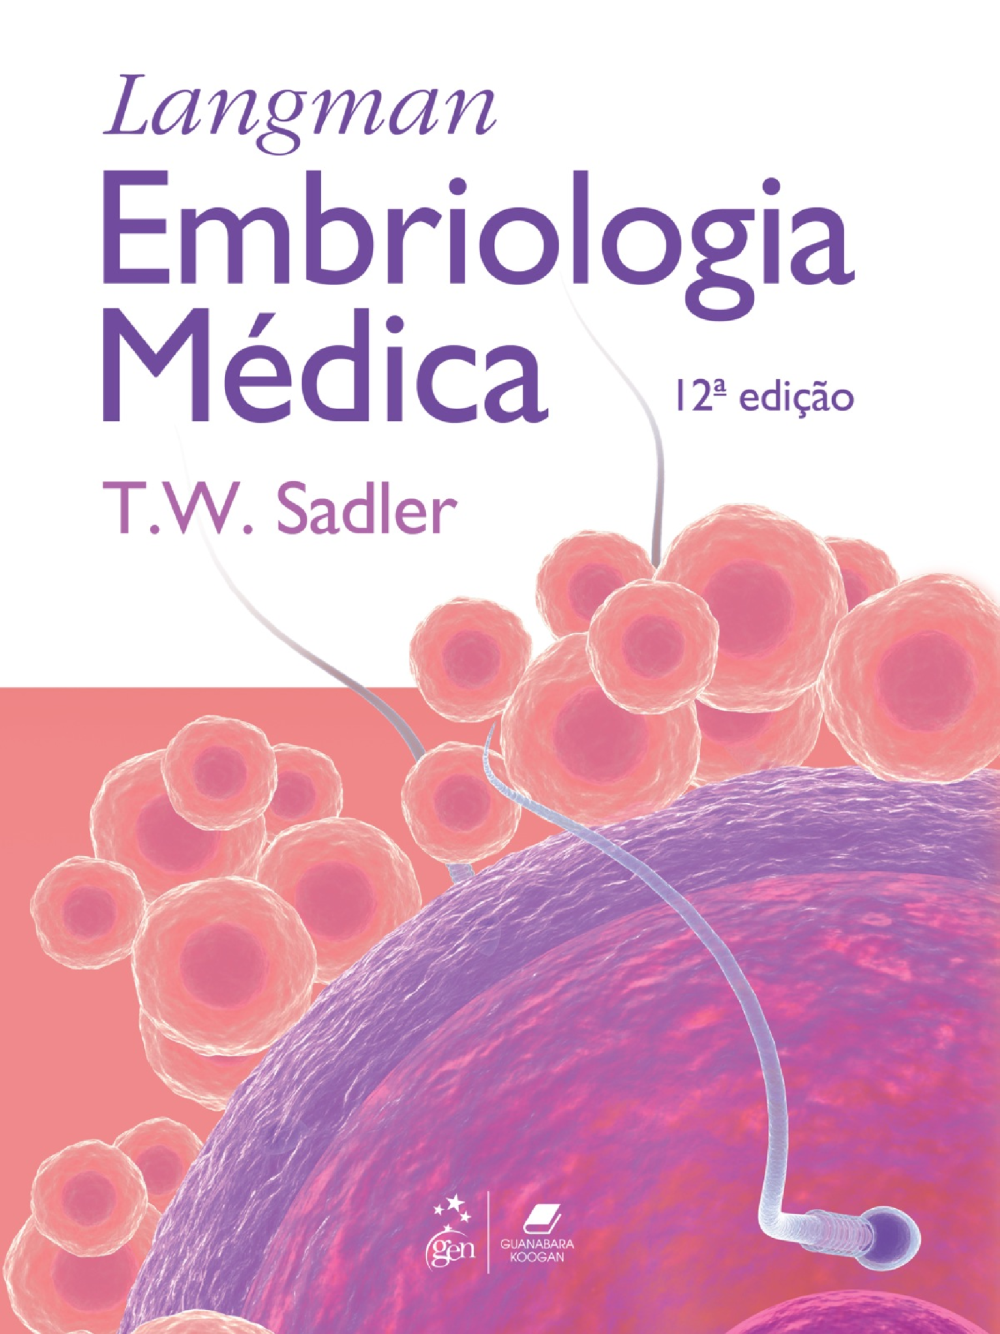 embriologia medica langman 9 edicion pdf